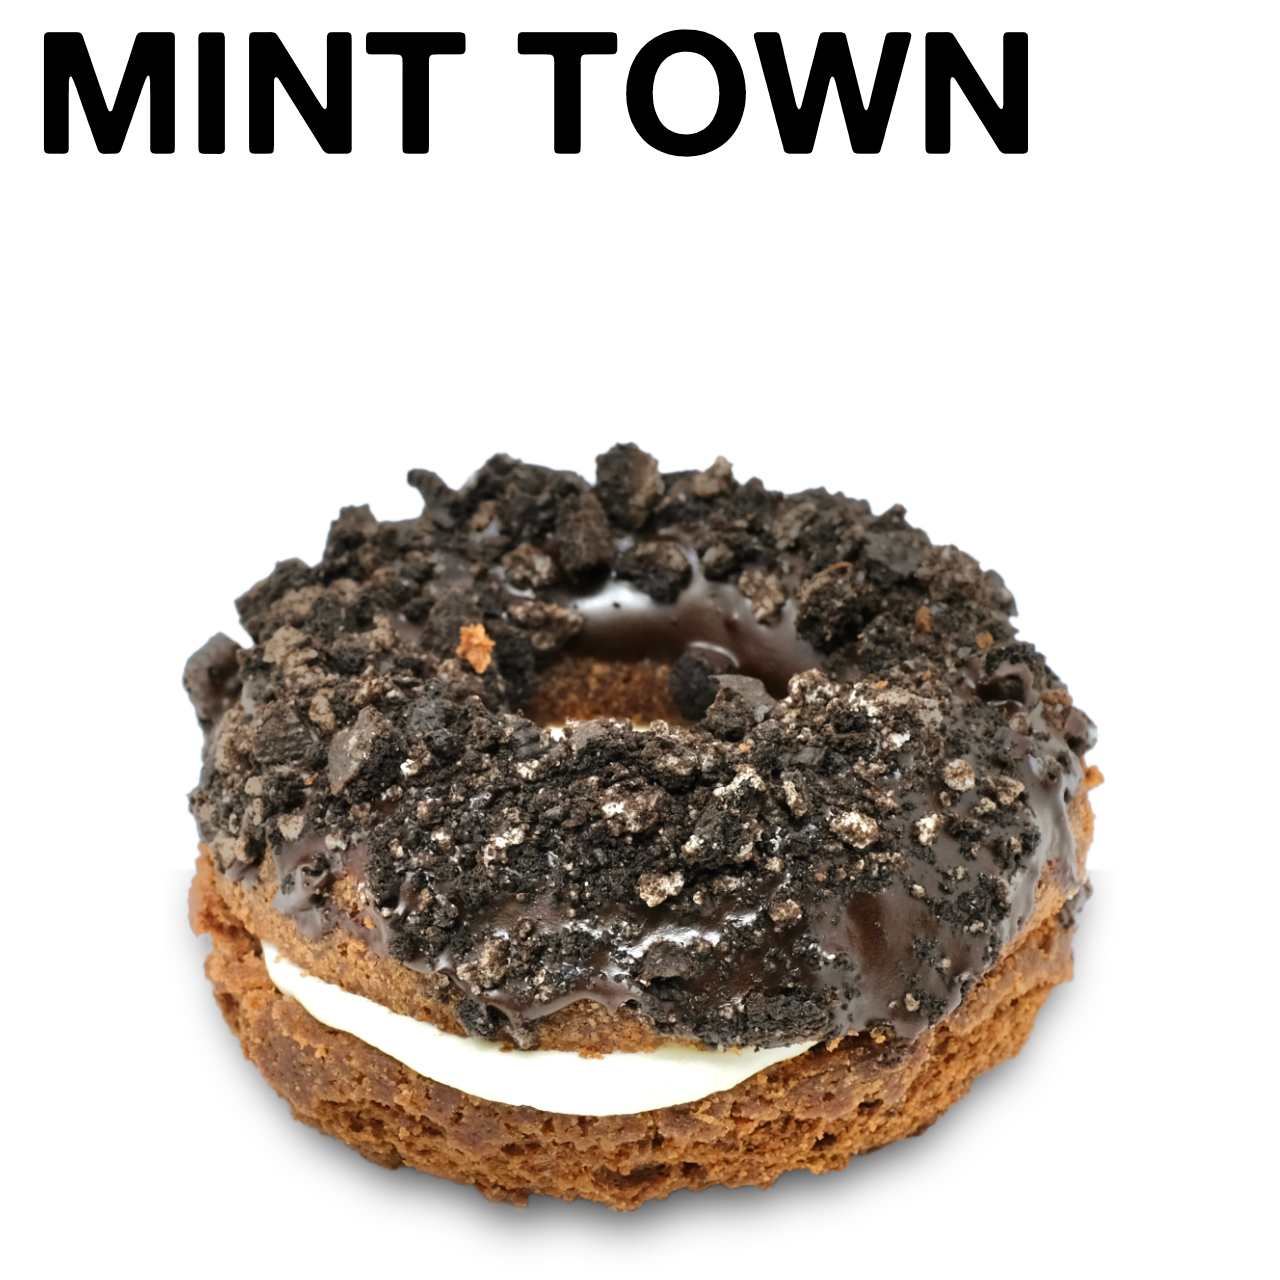 Mint Town